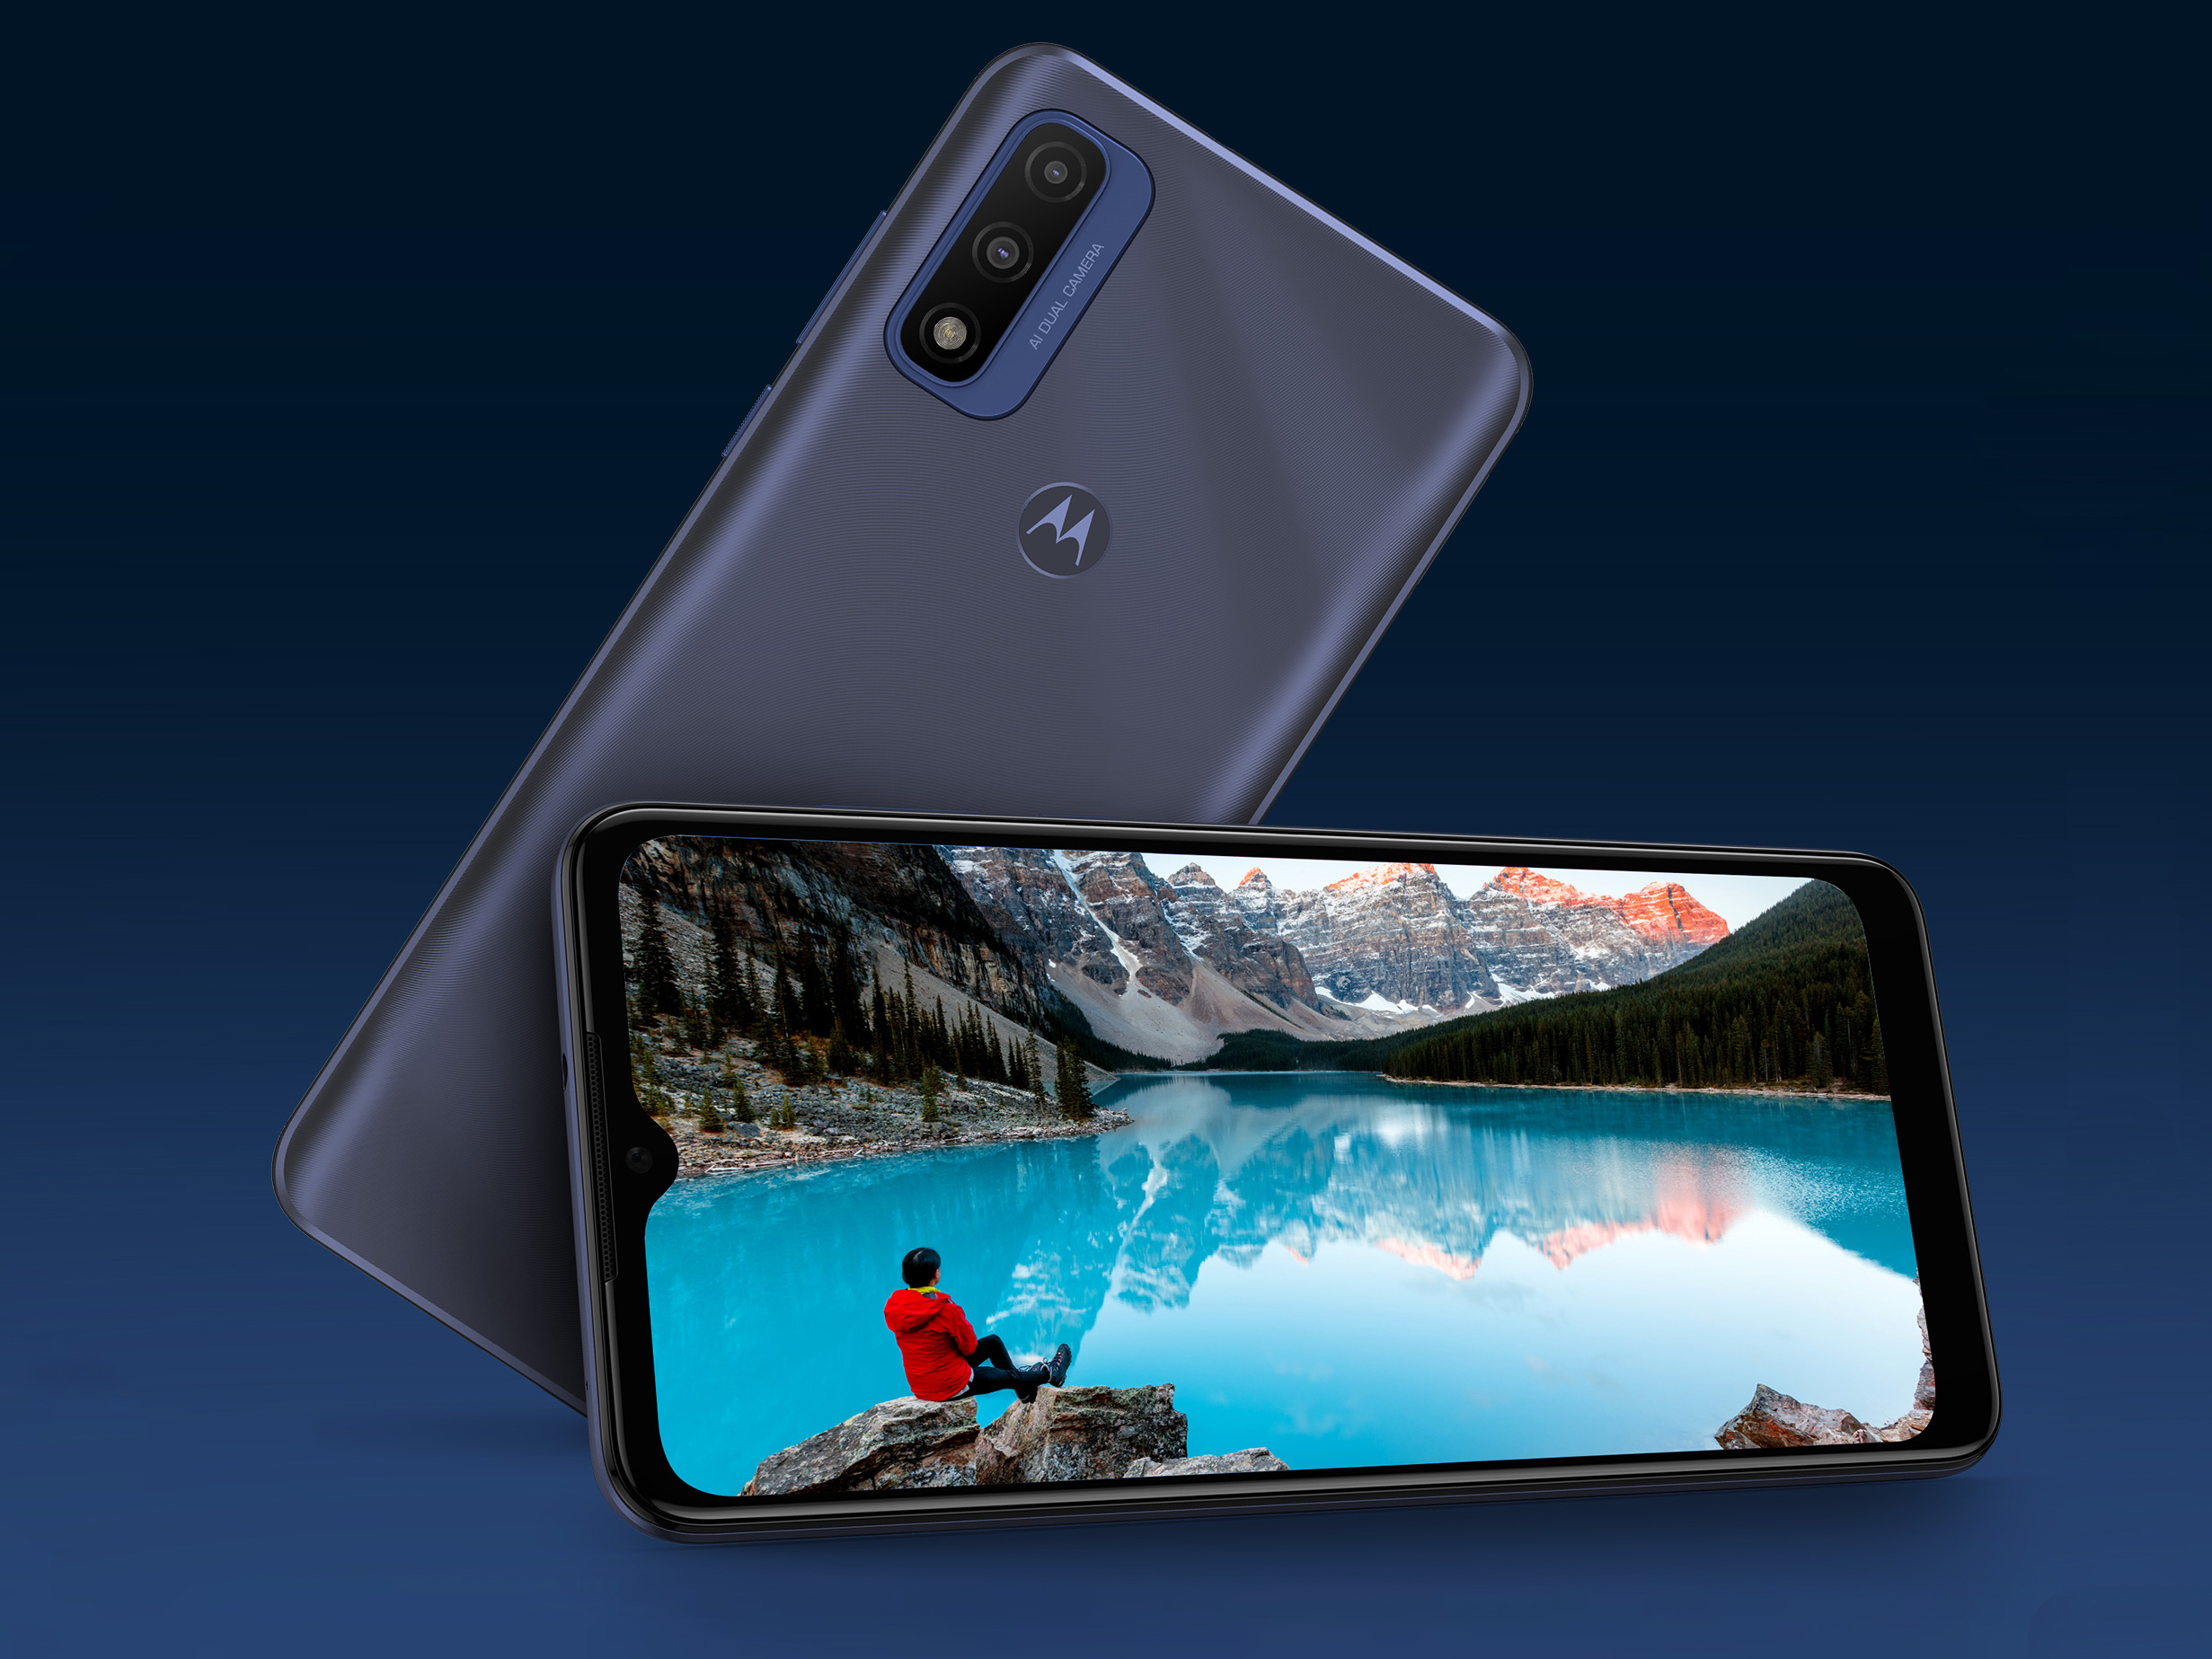 Consumer Cellular, Motorola Moto G Play 2023, 32GB, Navy Blue - Smartphone  